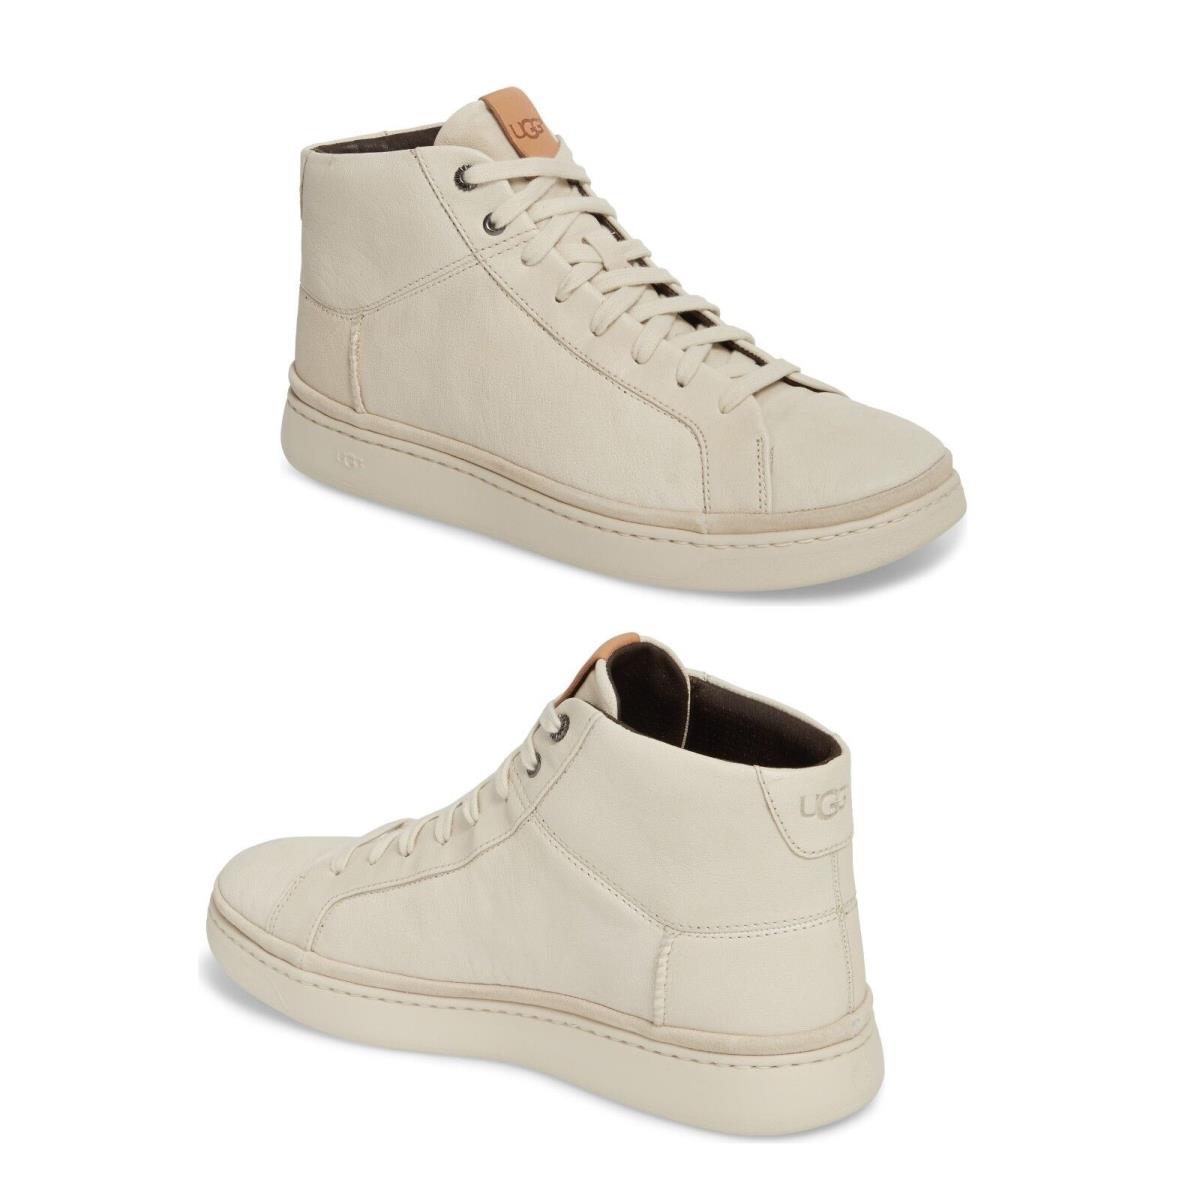 Ugg Shoes Fashion Men 1094653 Cali Sneaker High Top White Parchment - White, Parchment